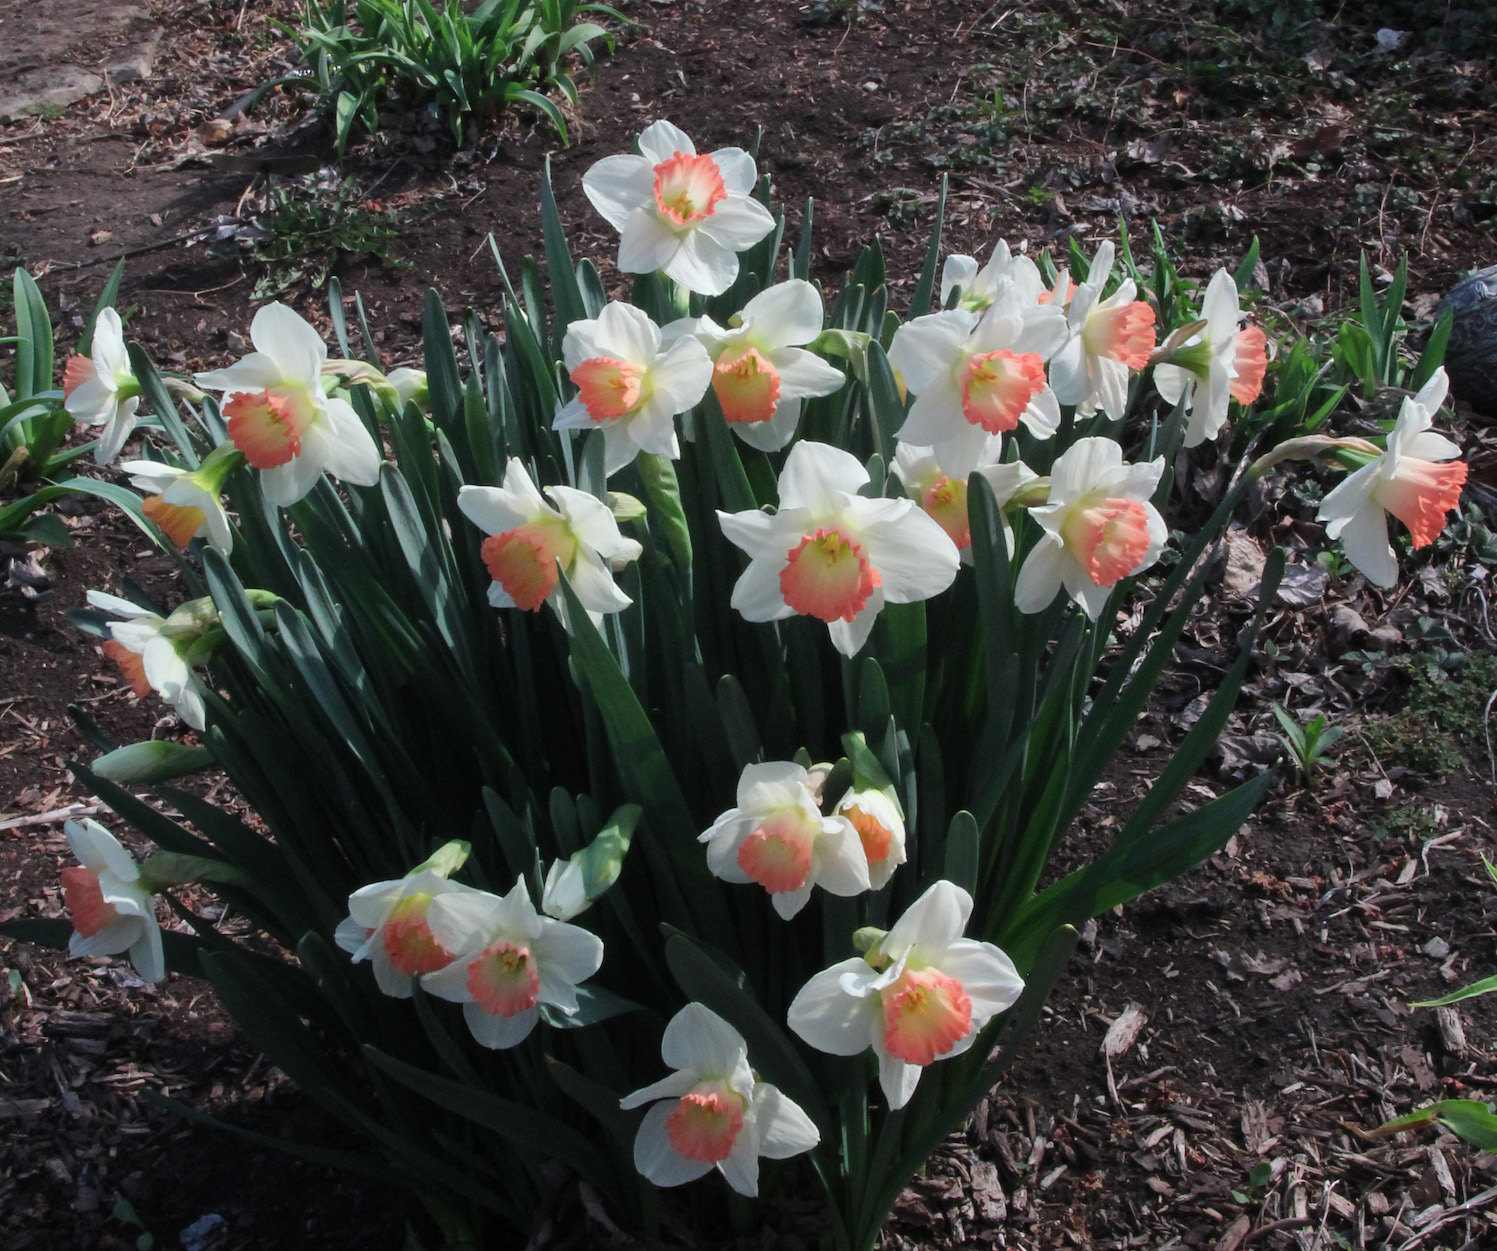 [More Daffodils]